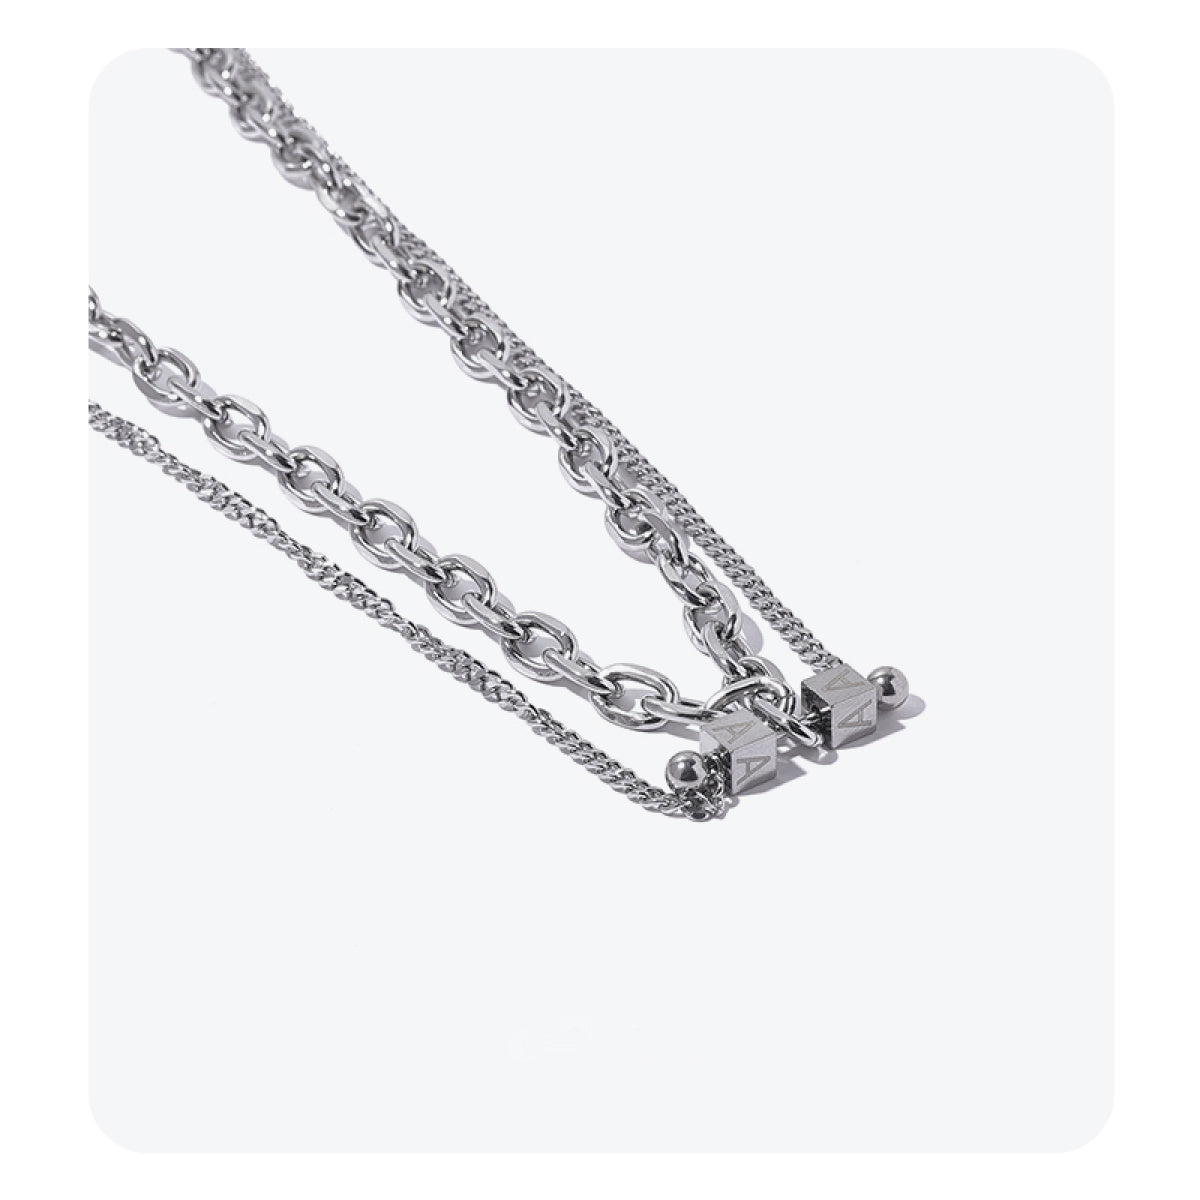 Double Chains Design Letter Square Shaped Charm Necklace